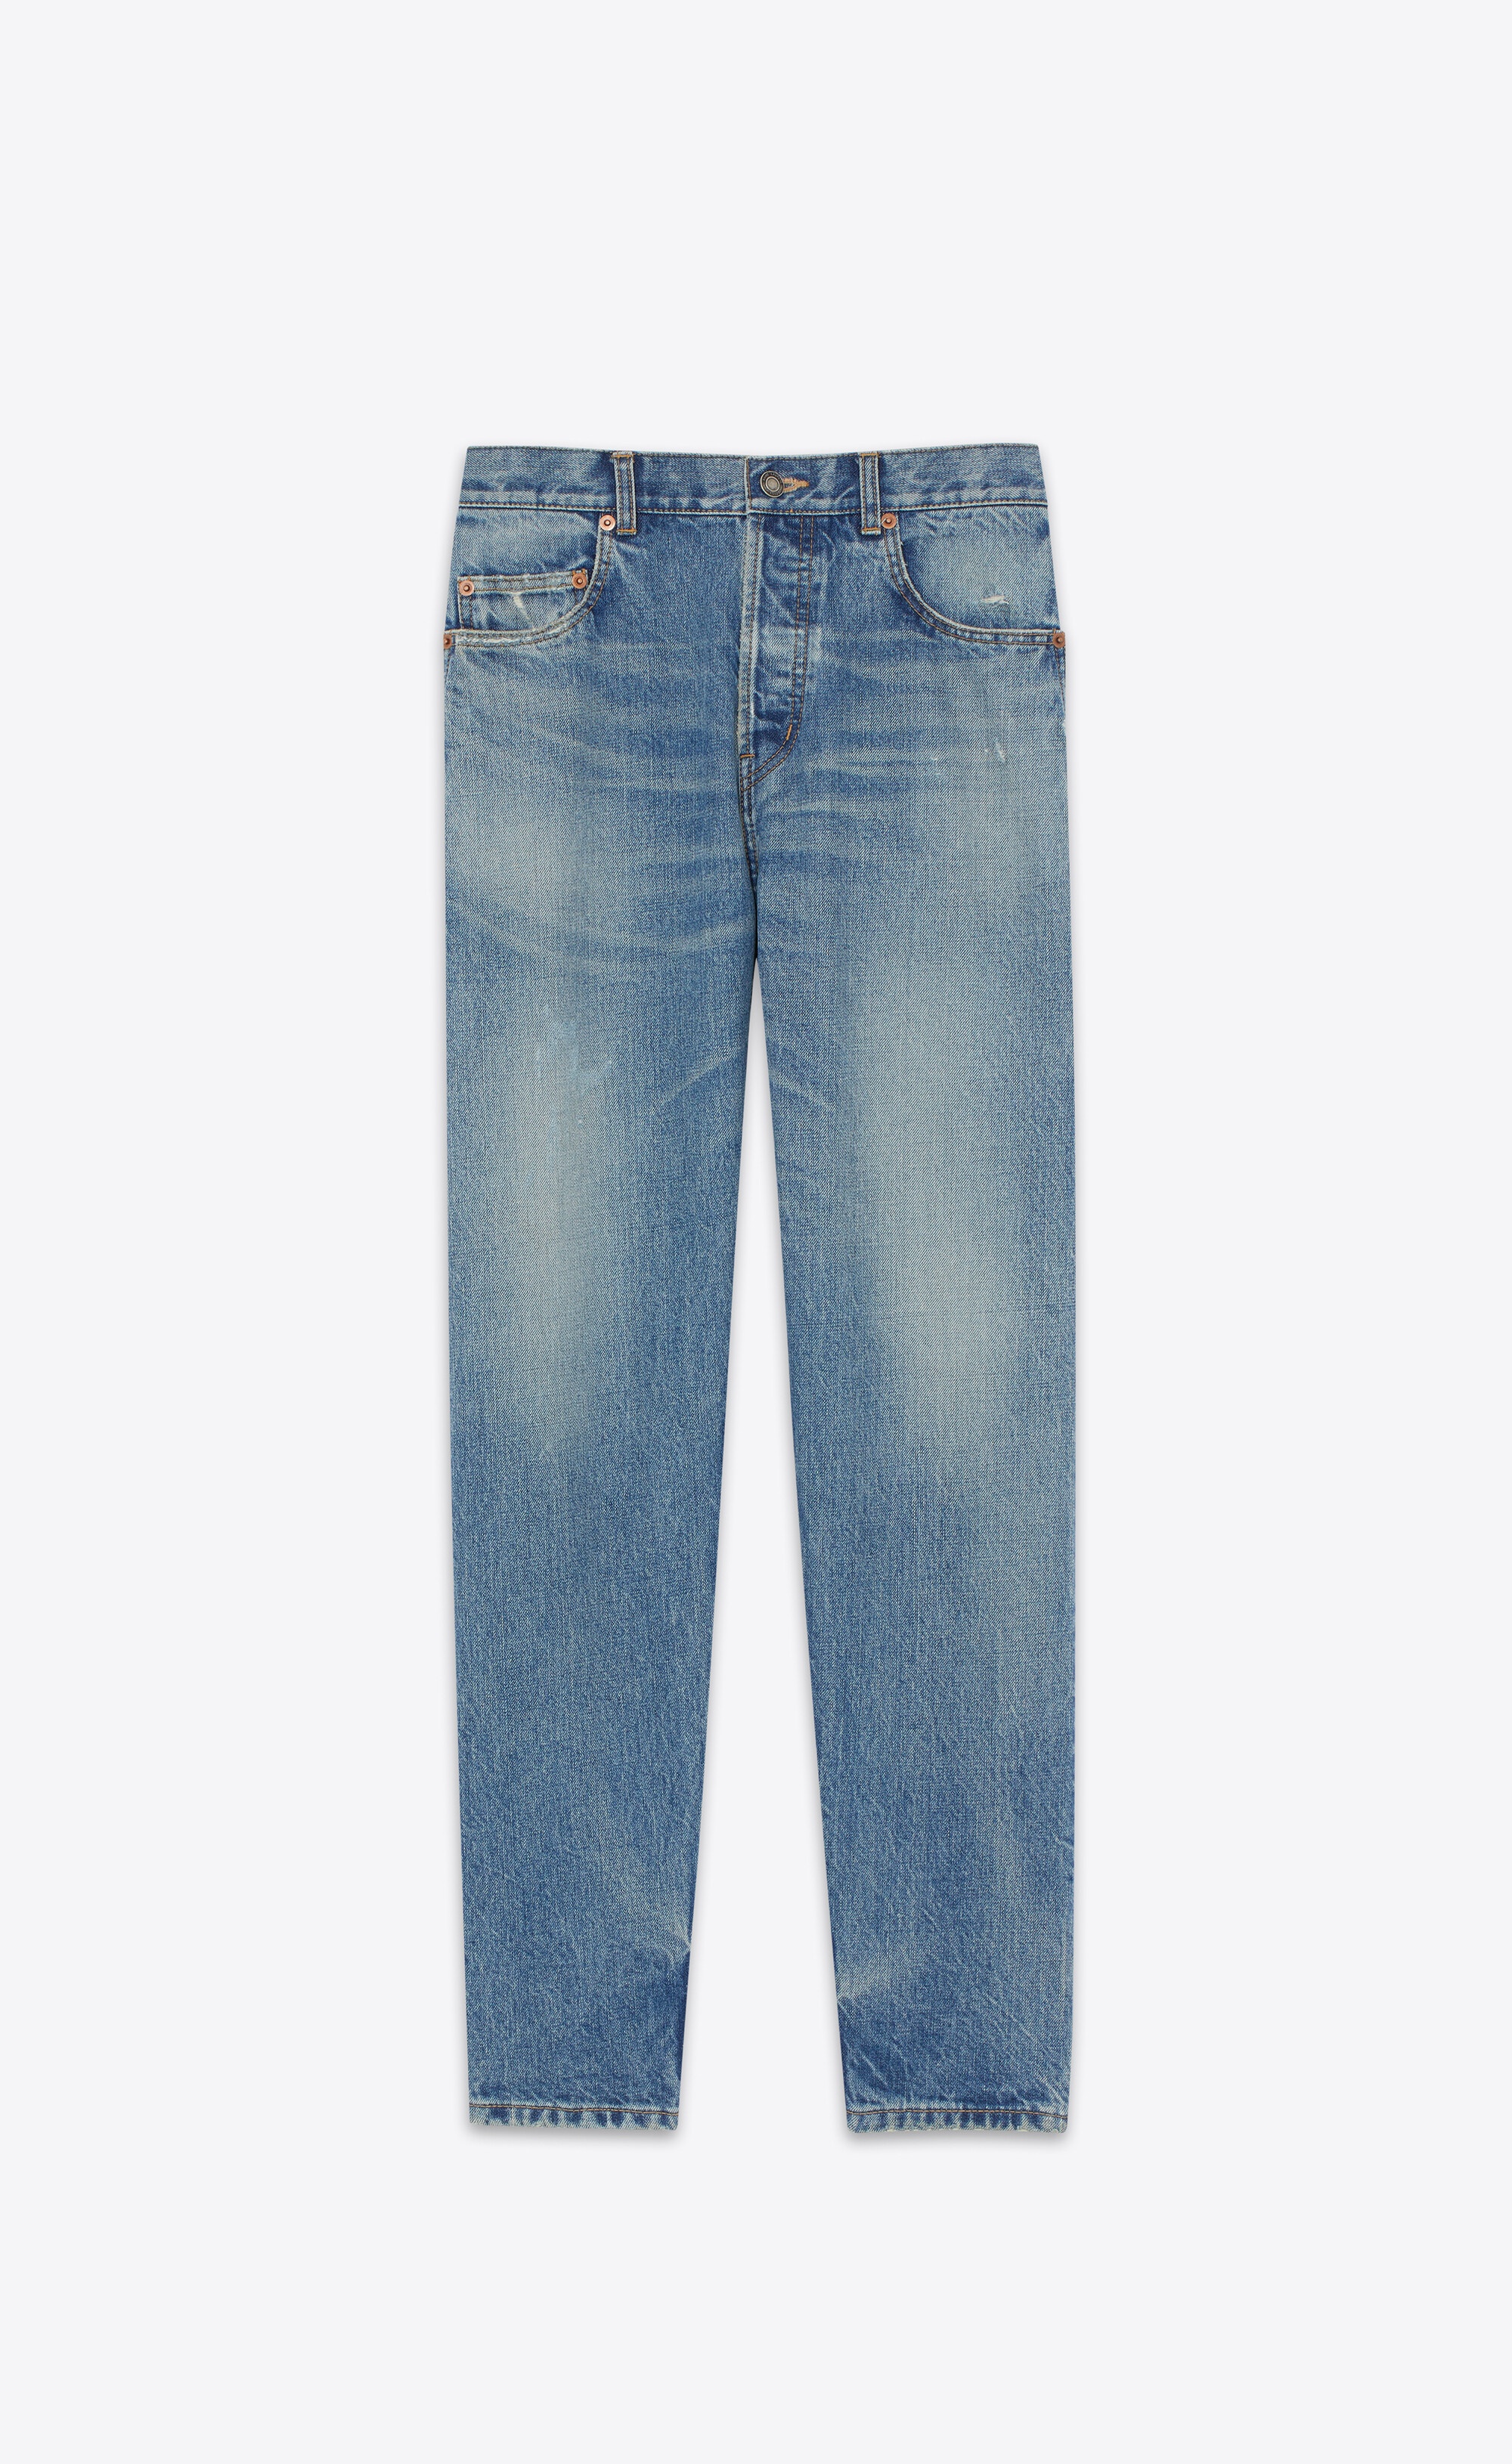 vanessa jeans in charlotte blue denim - 1